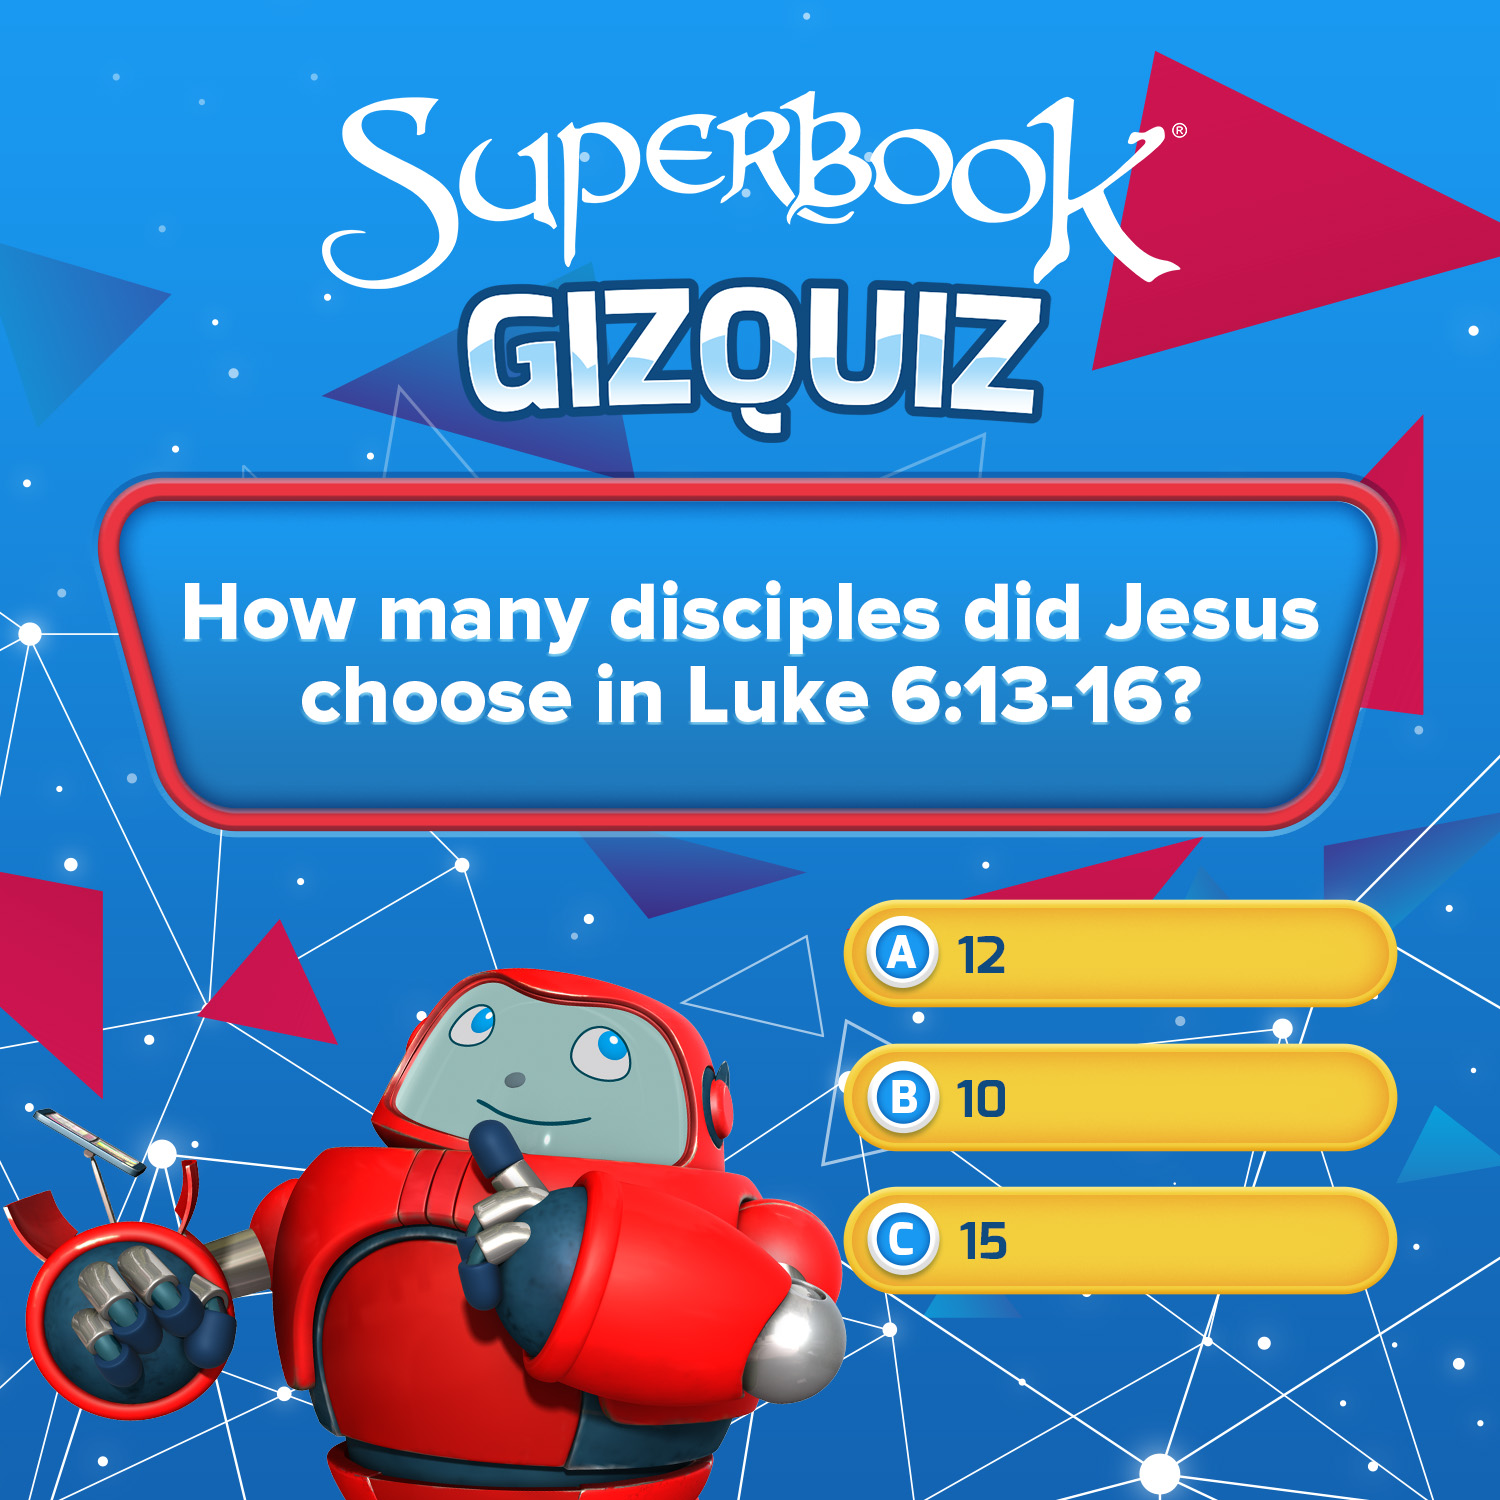 'SupERBOOK GIZQUIZ How many disciples did Jesus choose in Luke 6:13-16? A 12 B 10 C 15'